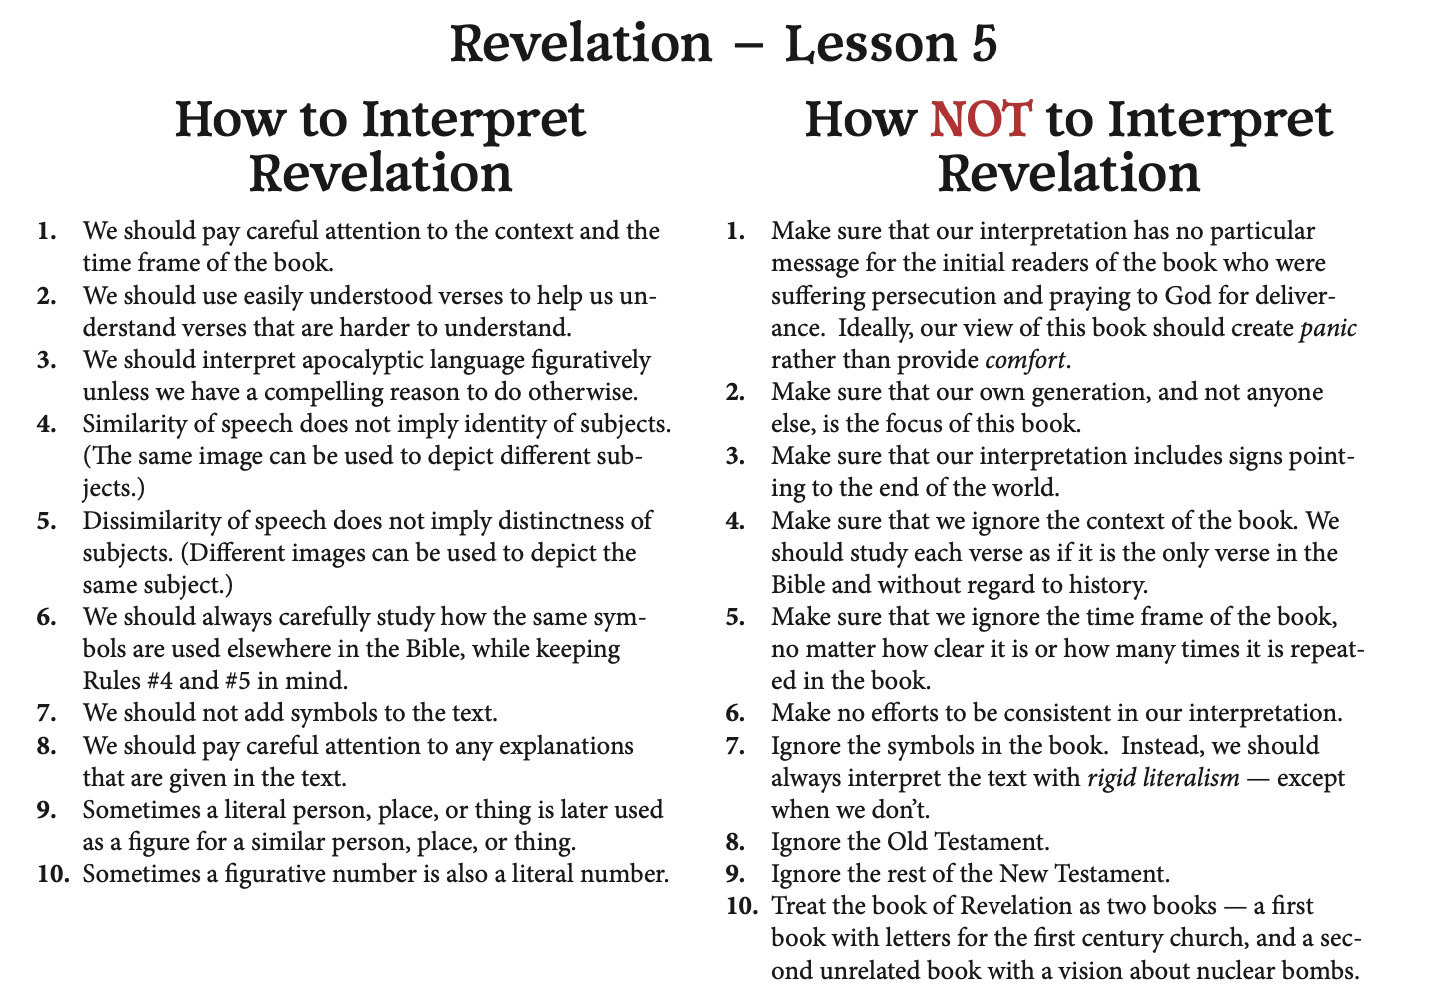 How NOT to Interpret Revelation